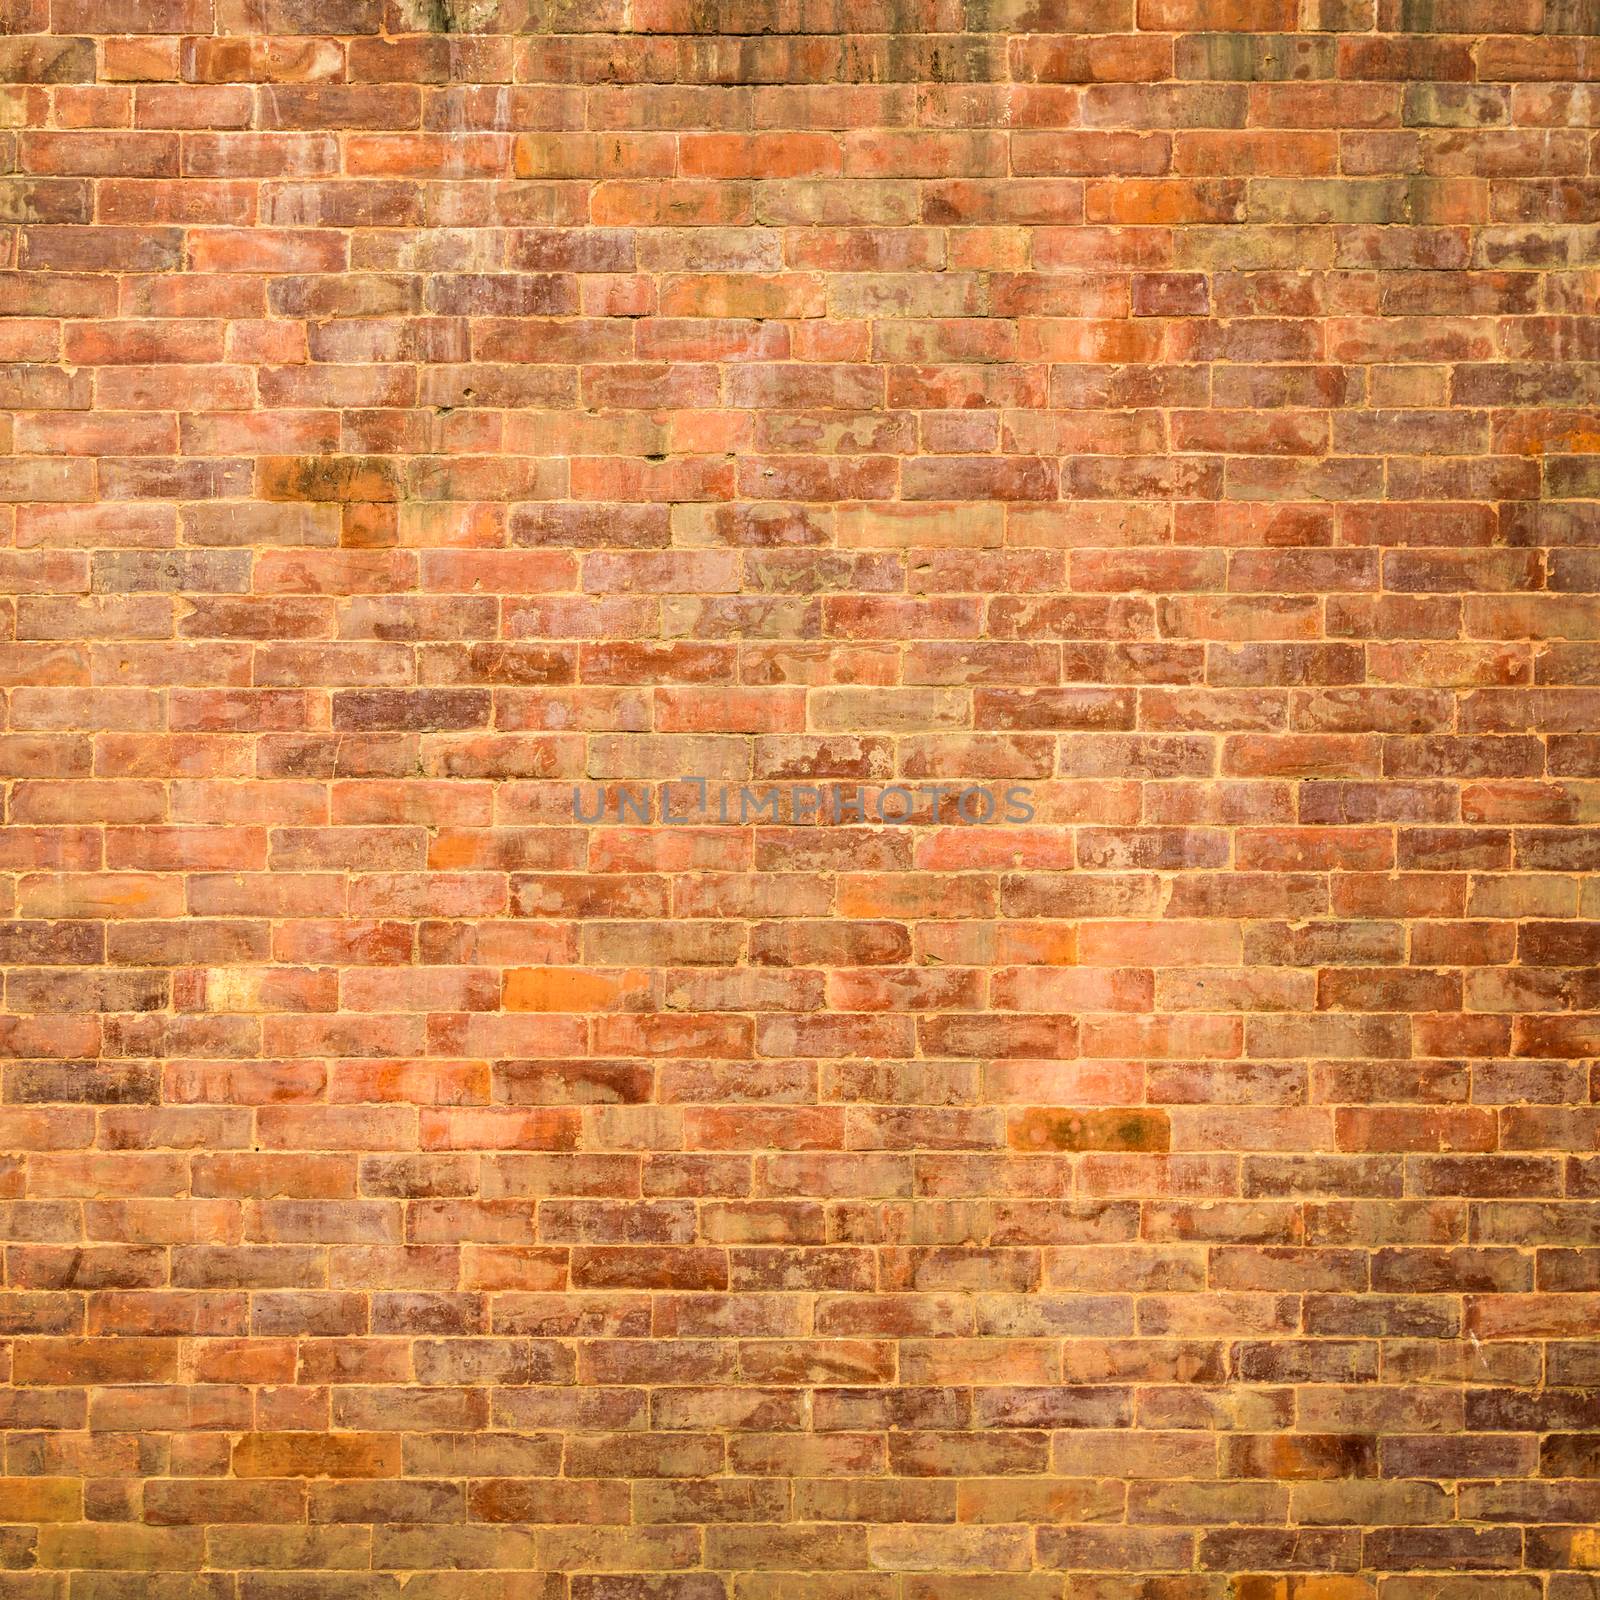 Brick wall texture by dutourdumonde